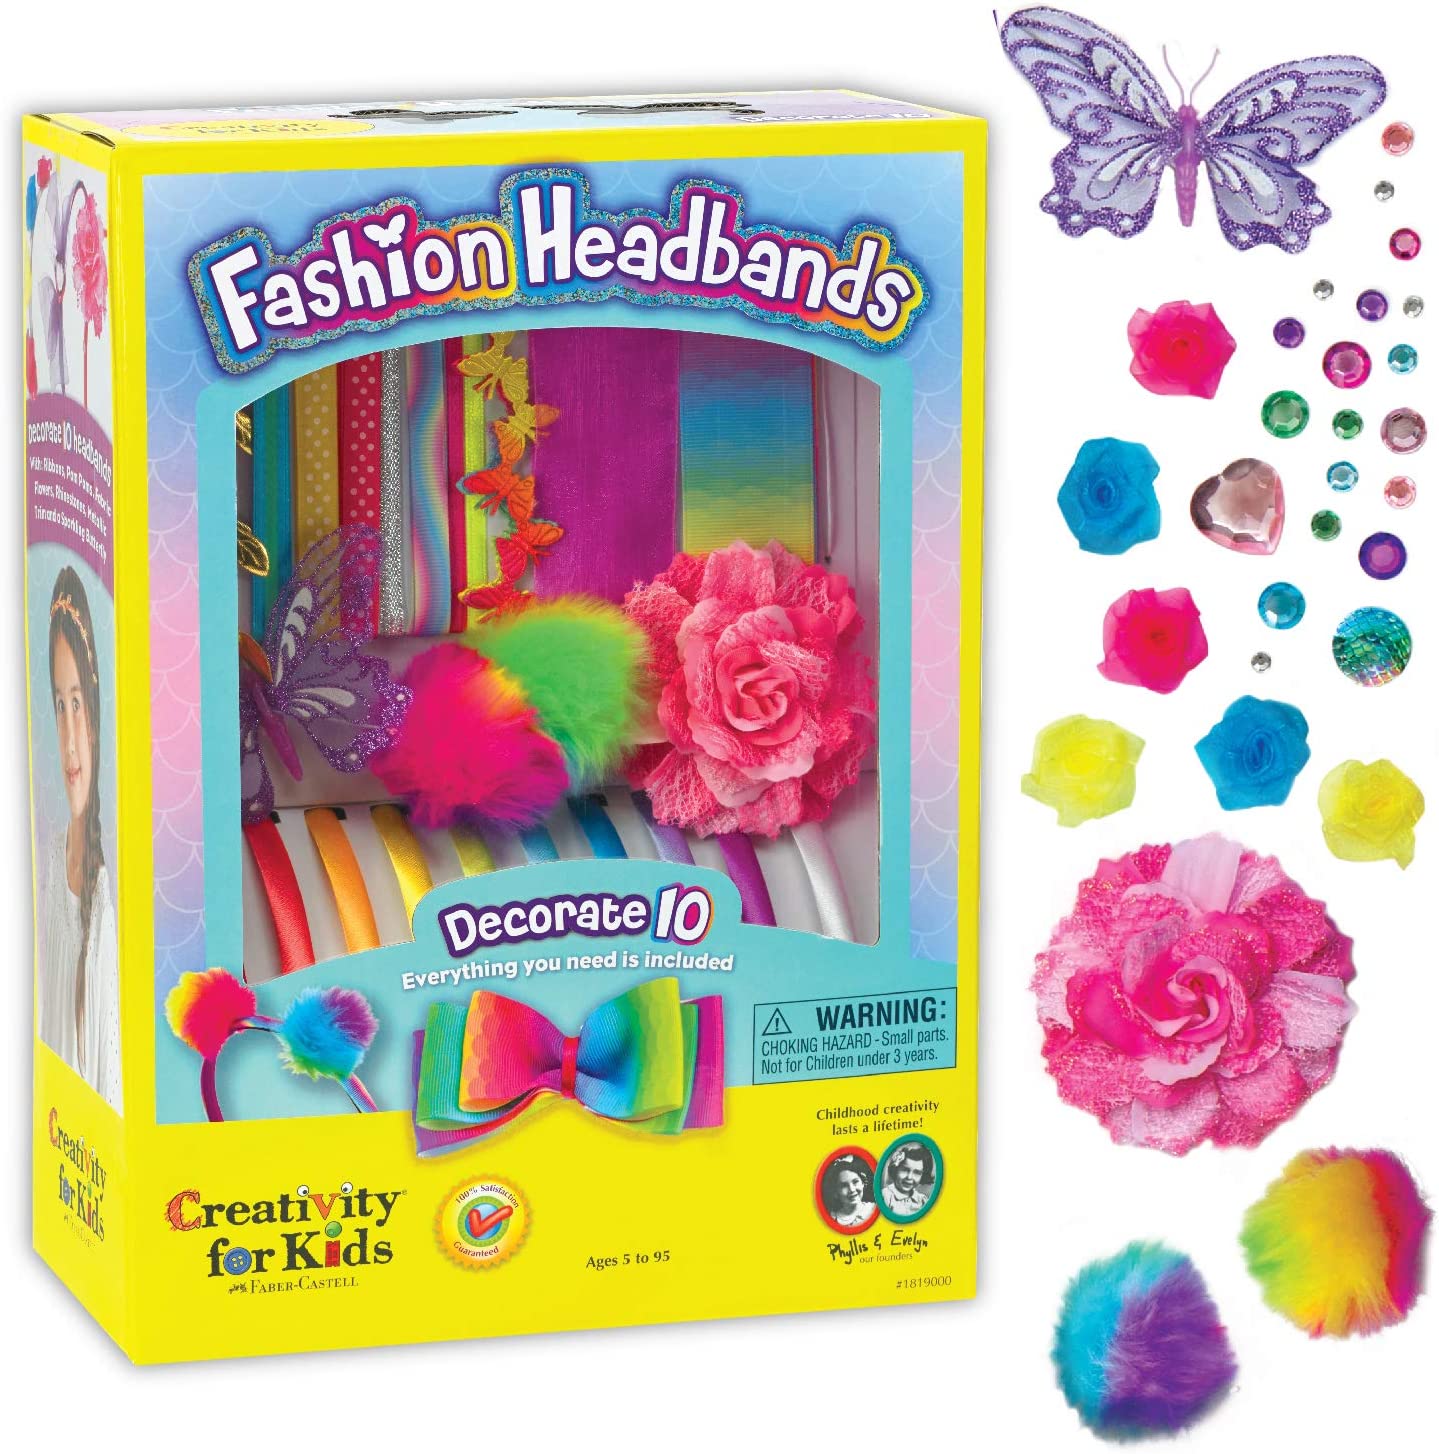 creativity for kids fashion headbands craft kit,